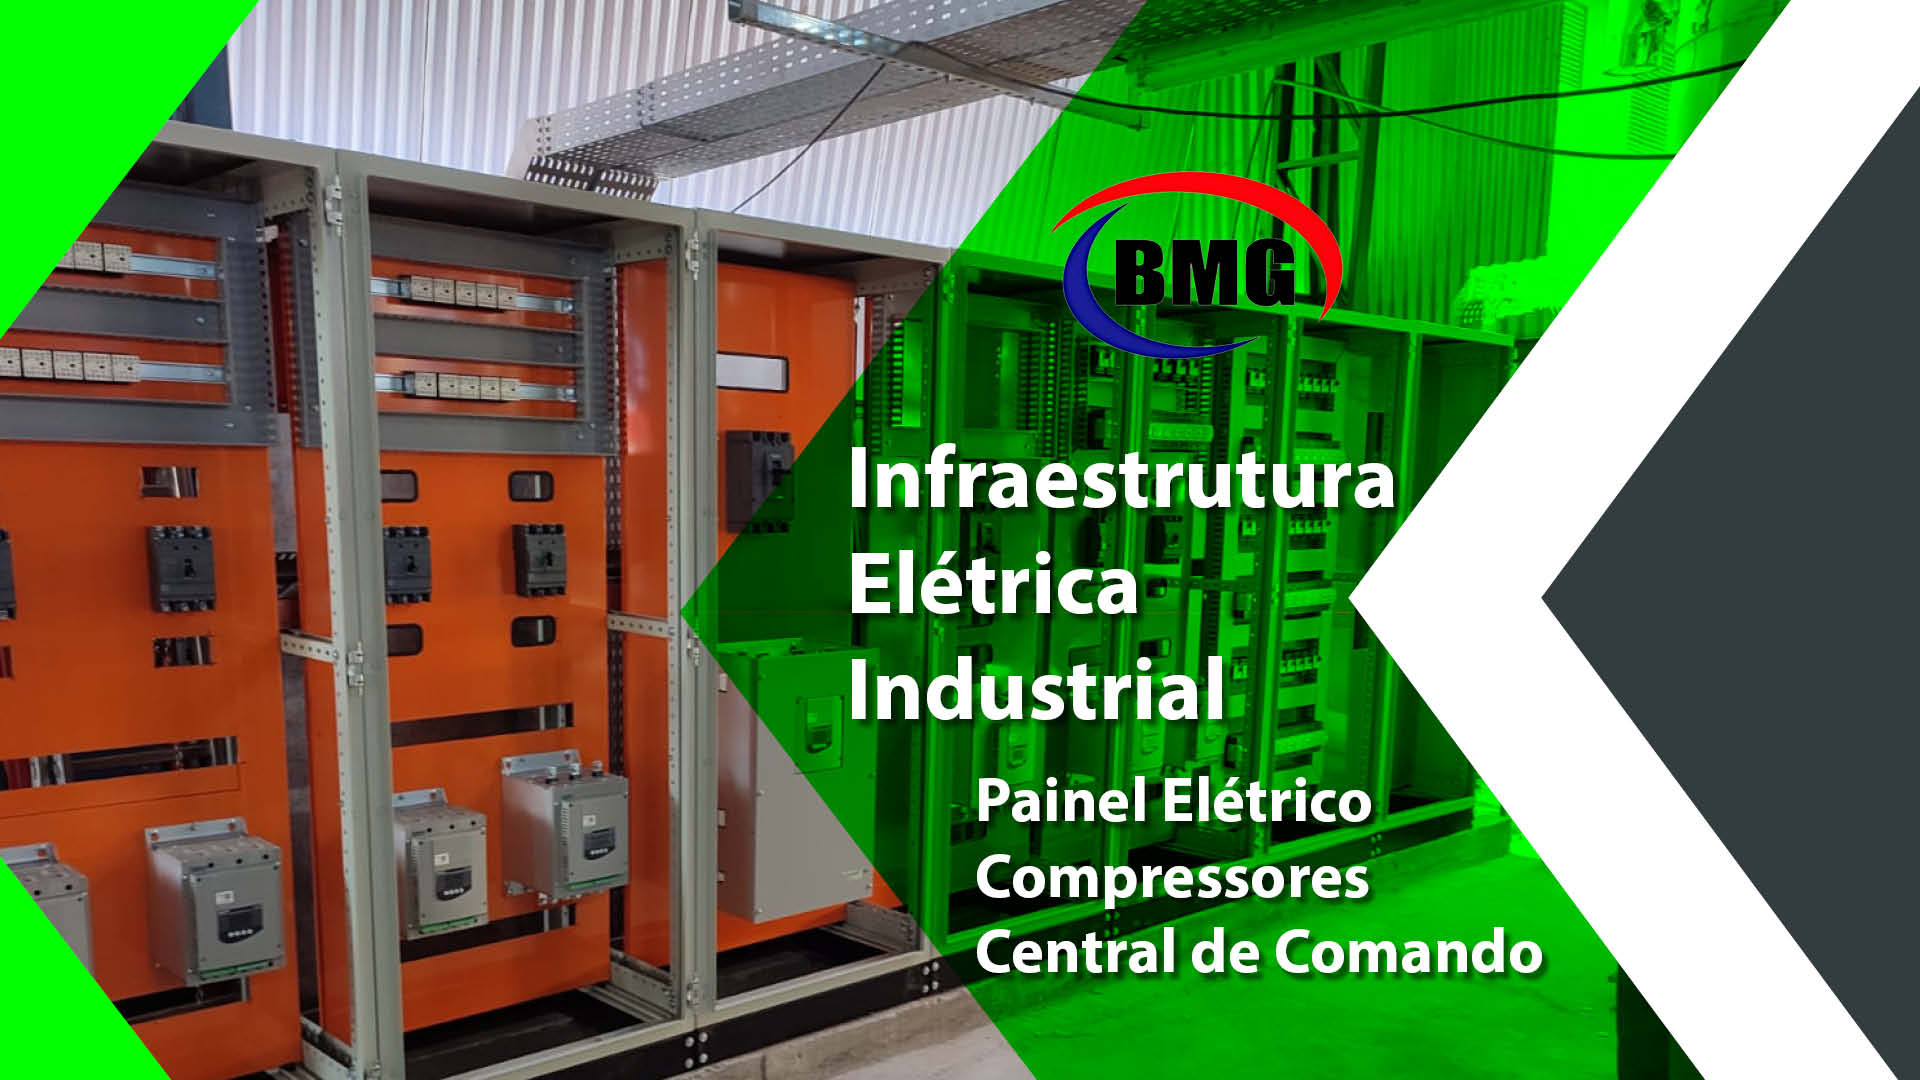 Infraestrutura Elétrica Industrial - BMG Foods